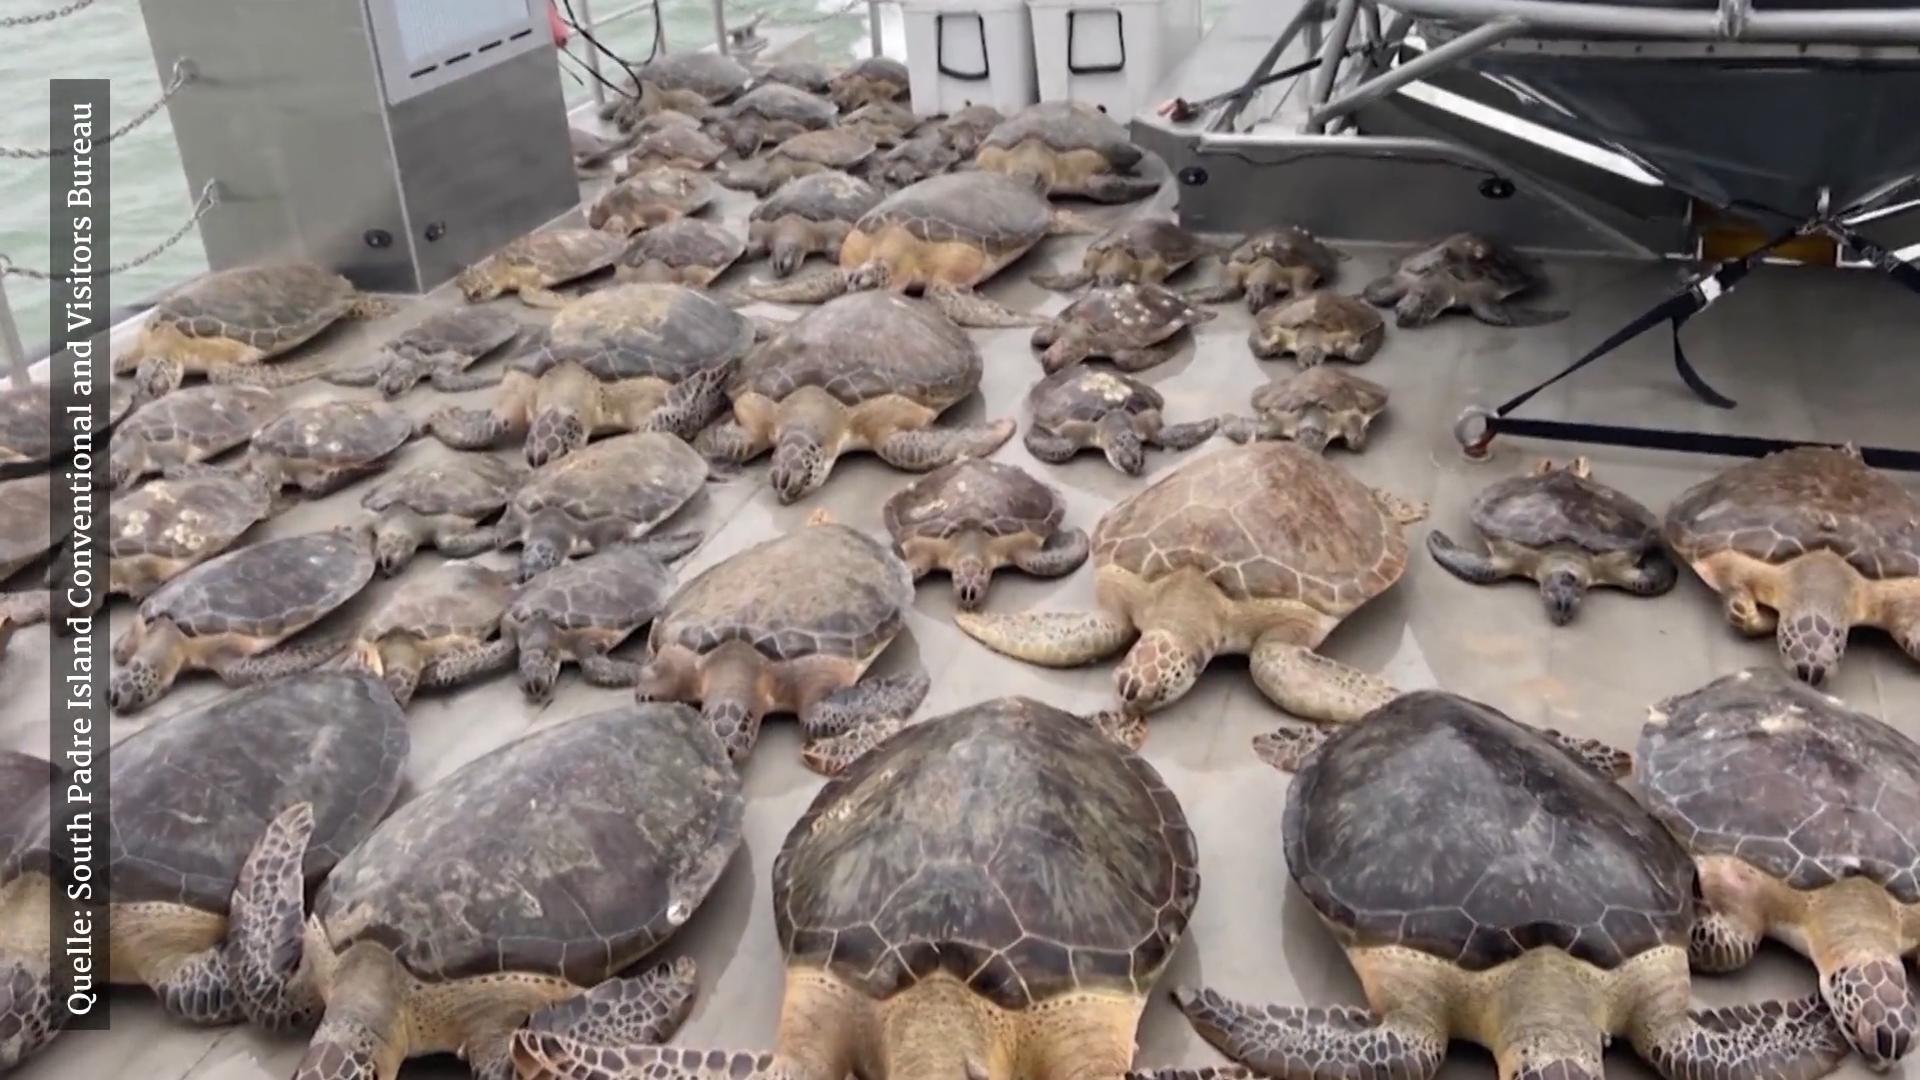 Helfer retten Tausende Meereschildkröten vor dem Erfrieren Wegen Eiseskälte in Texas